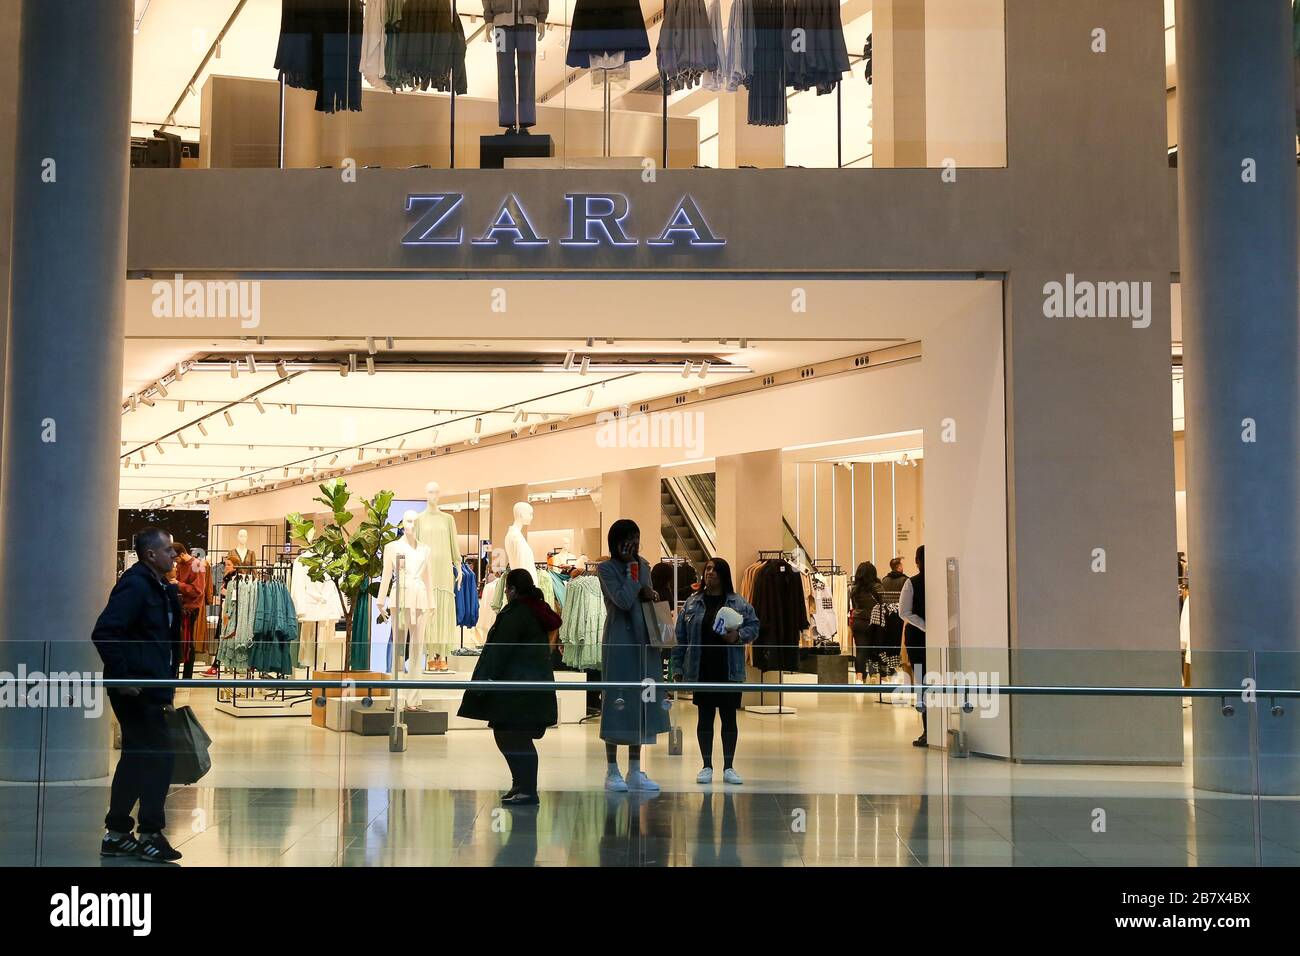 Exterior view of Zara in London, UK Stock Photo - Alamy